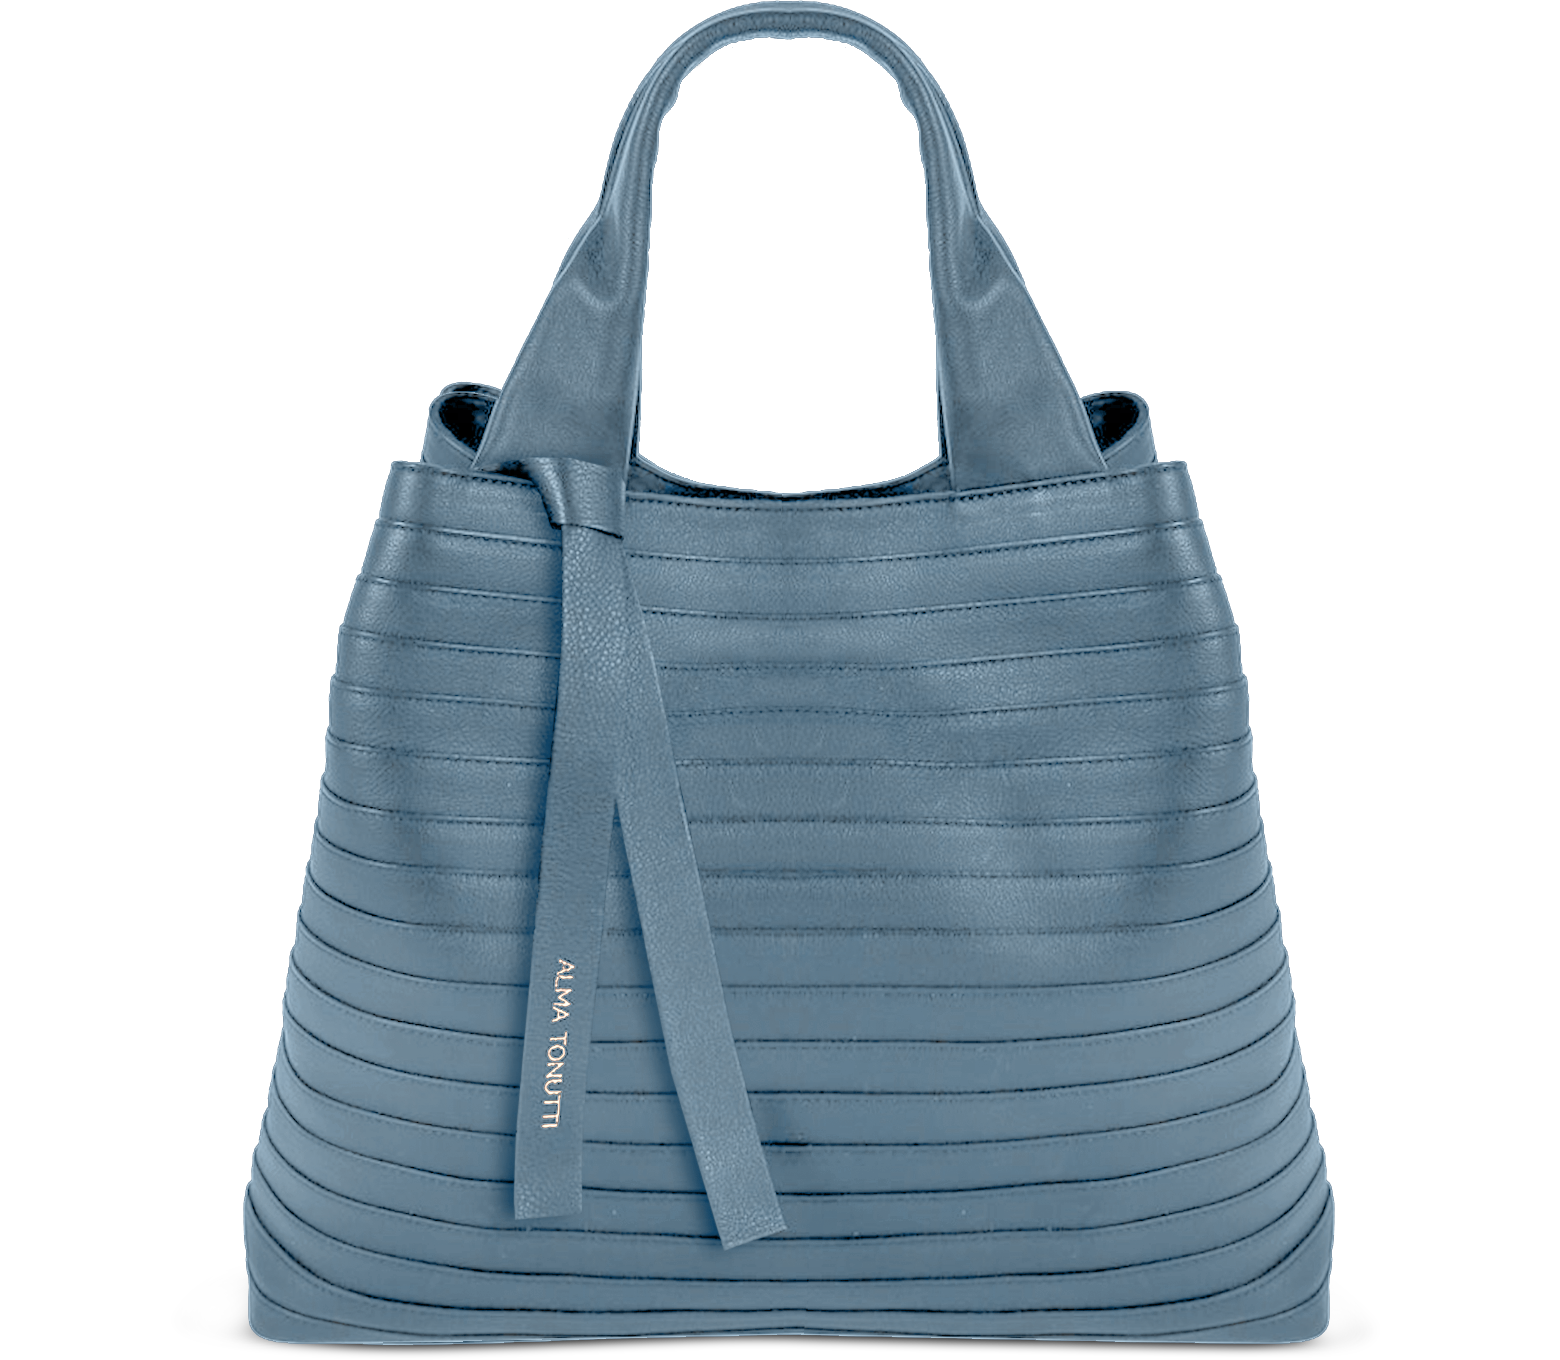 Alma Tonutti 5210 - Shoulder Bag at FORZIERI